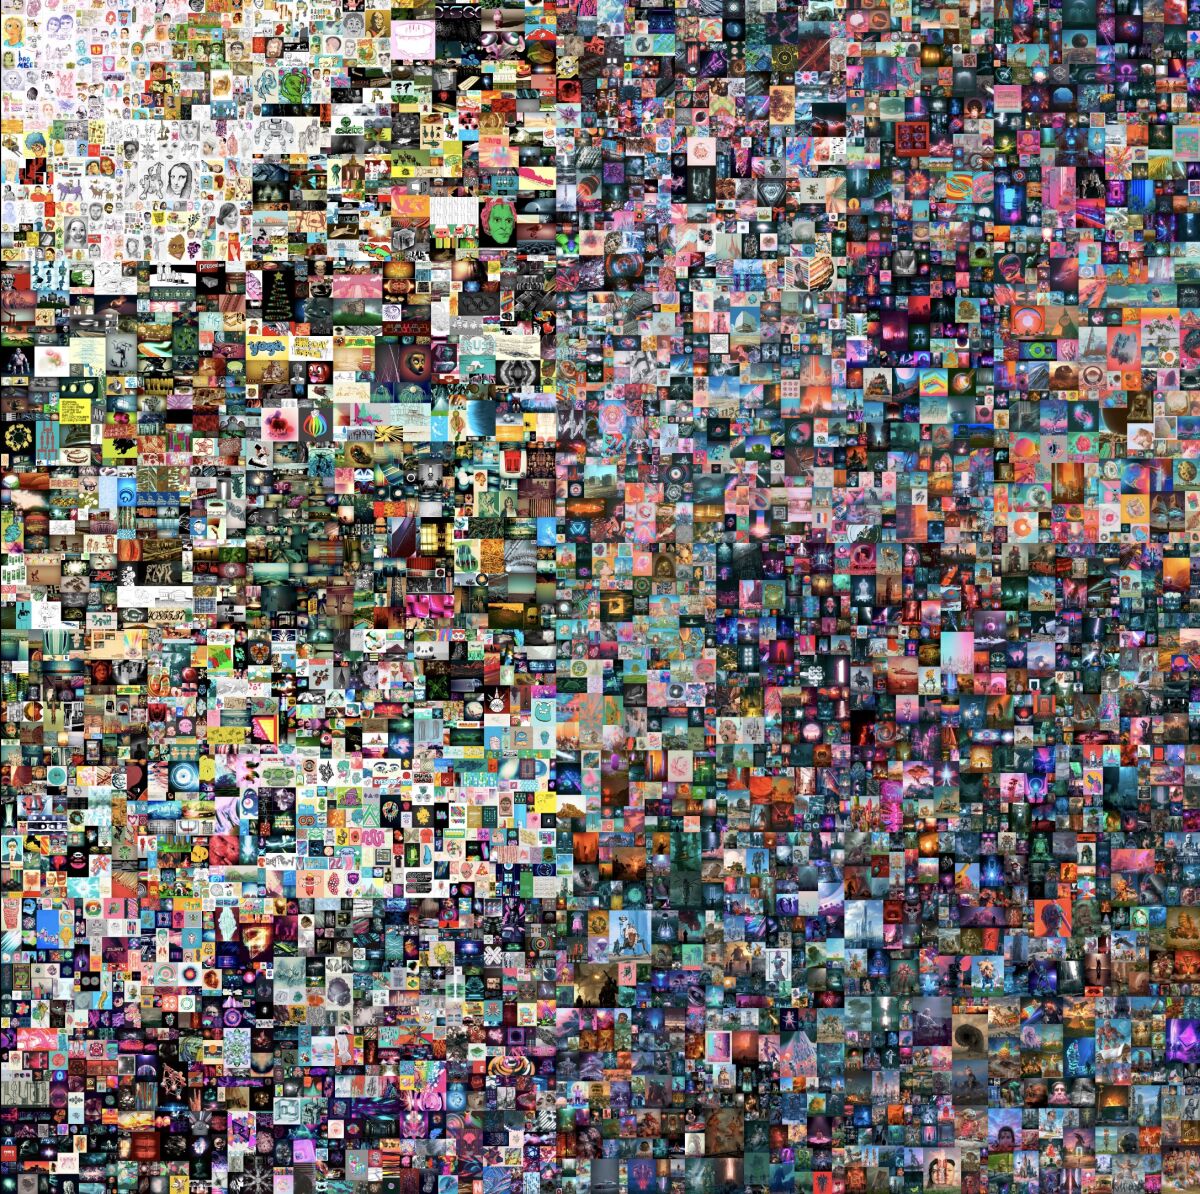 A digital composite shows thousands of digital images shrunken into a square.